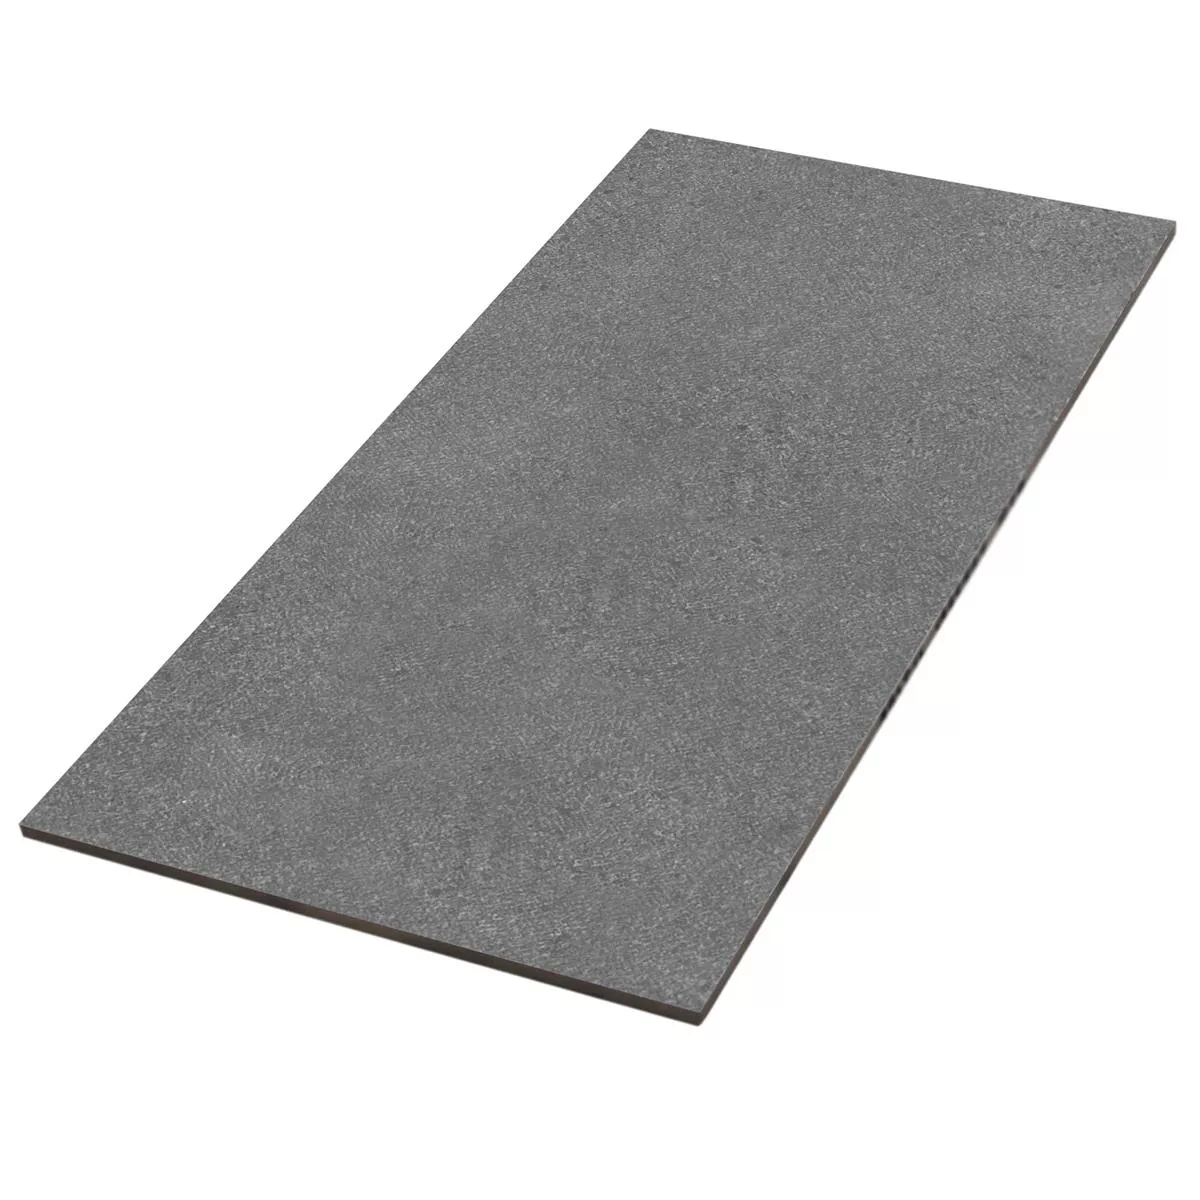 Floor Tiles Galilea Unglazed R10B Anthracite 30x60cm